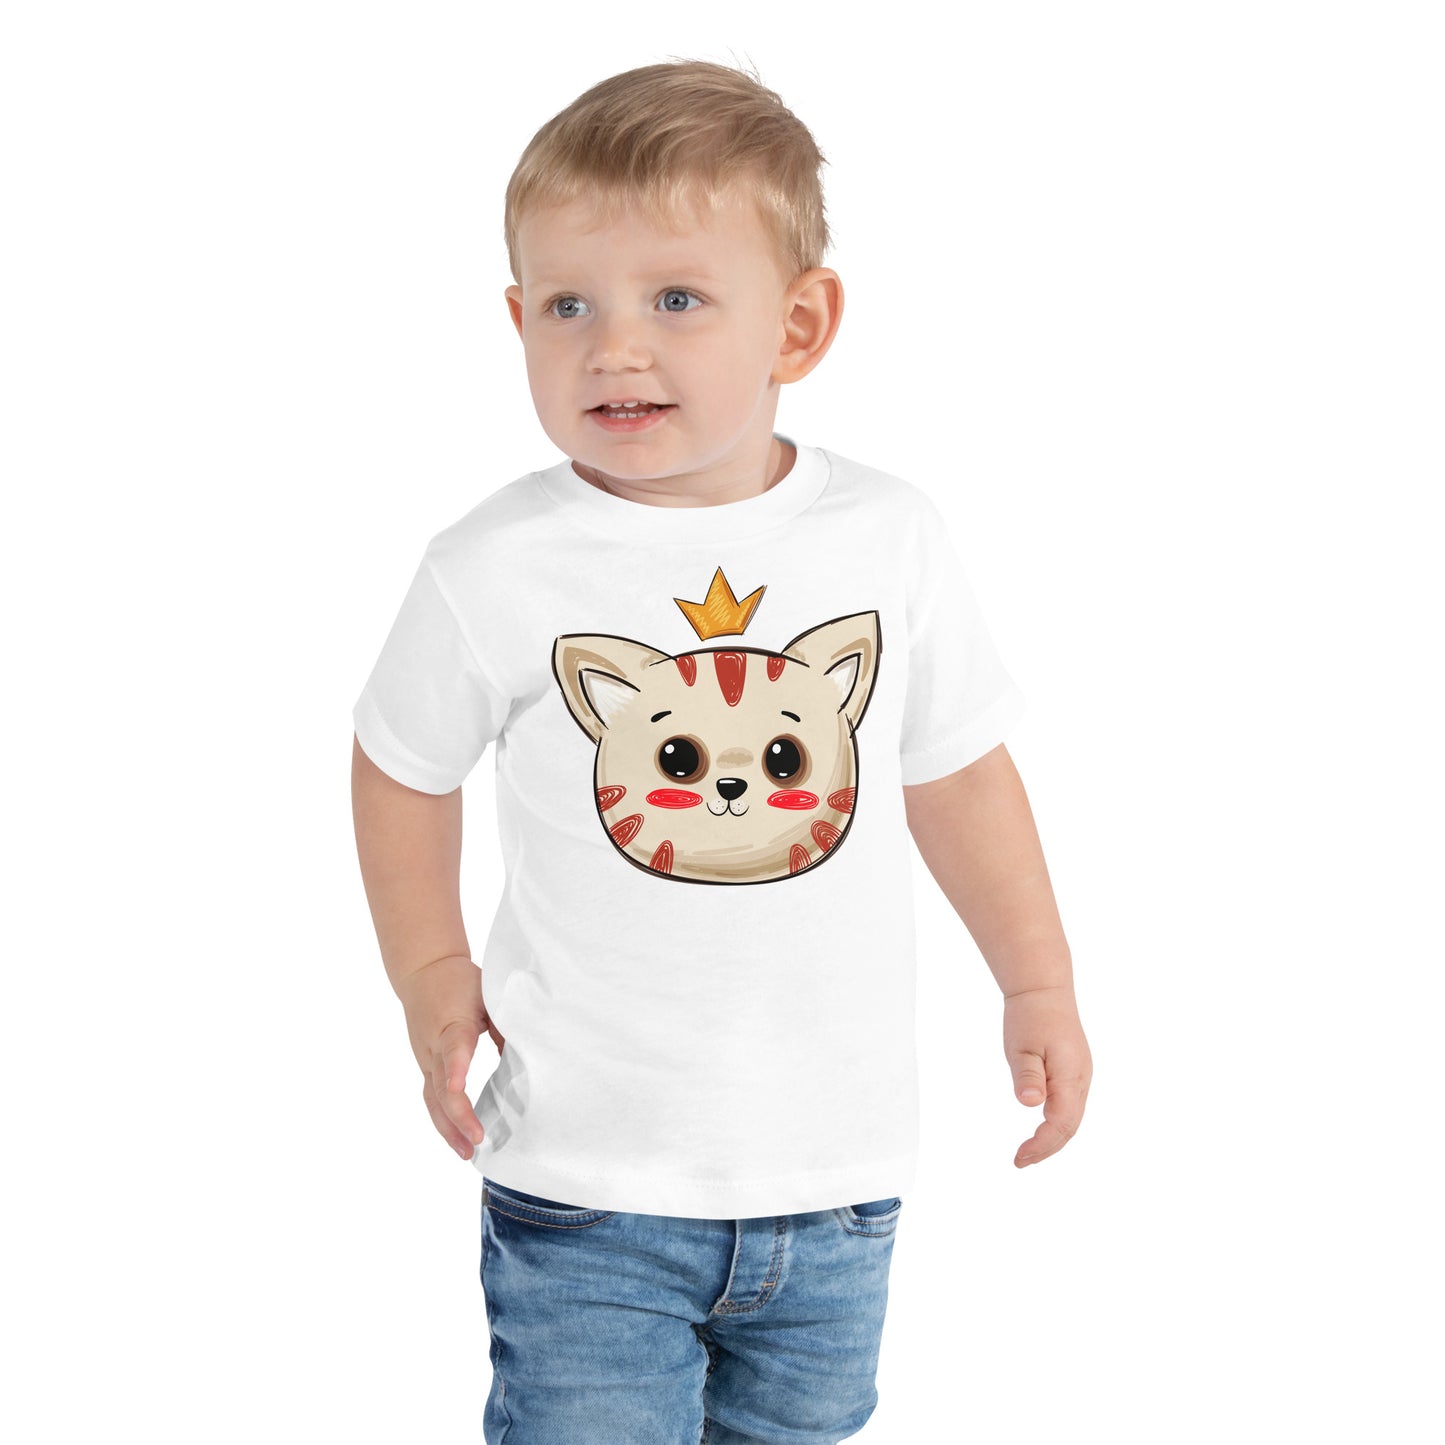 Cute Kitty Cat Face T-shirt, No. 0209